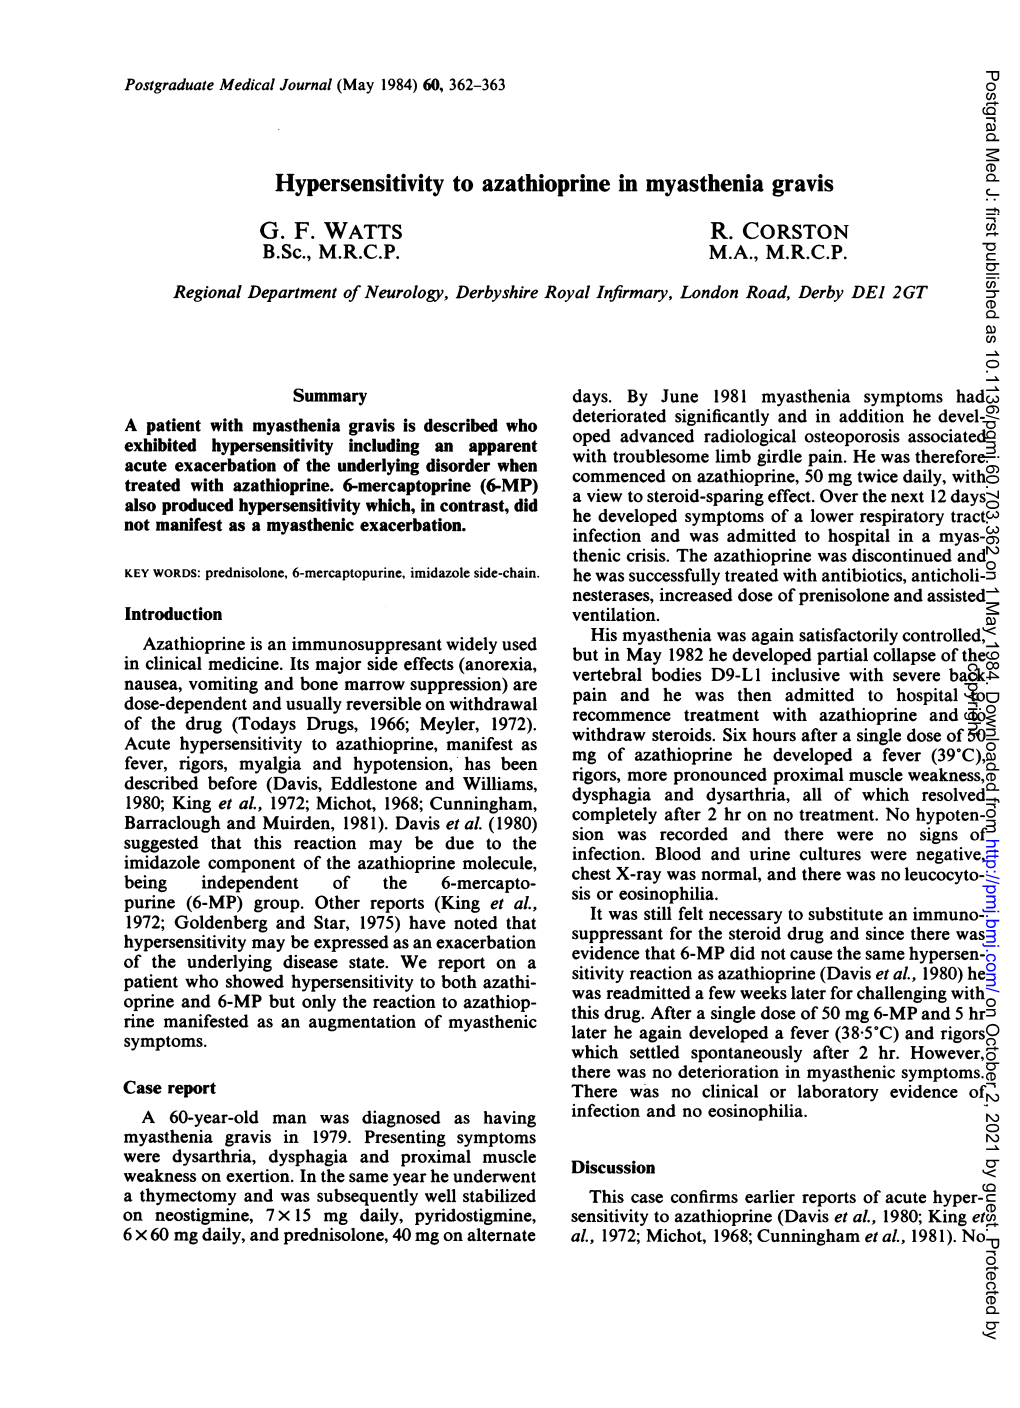 Hypersensitivity to Azathioprine in Myasthenia Gravis G. F. WATTS B.Sc., M.R.C.P. R. CORSTON